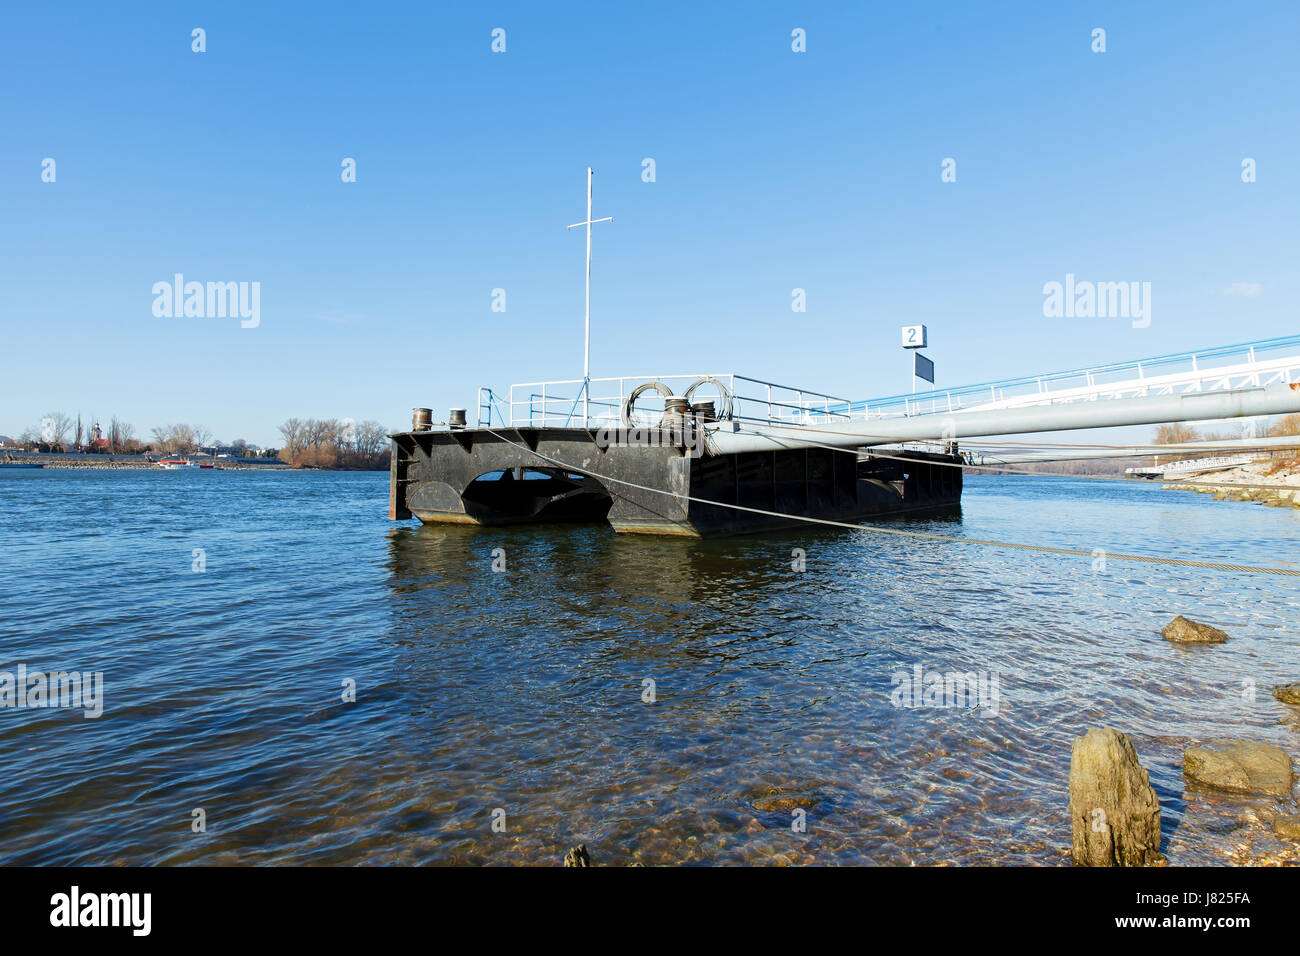 Immagine di un dock dal fiume Danubio a Esztergom in Ungheria Foto Stock